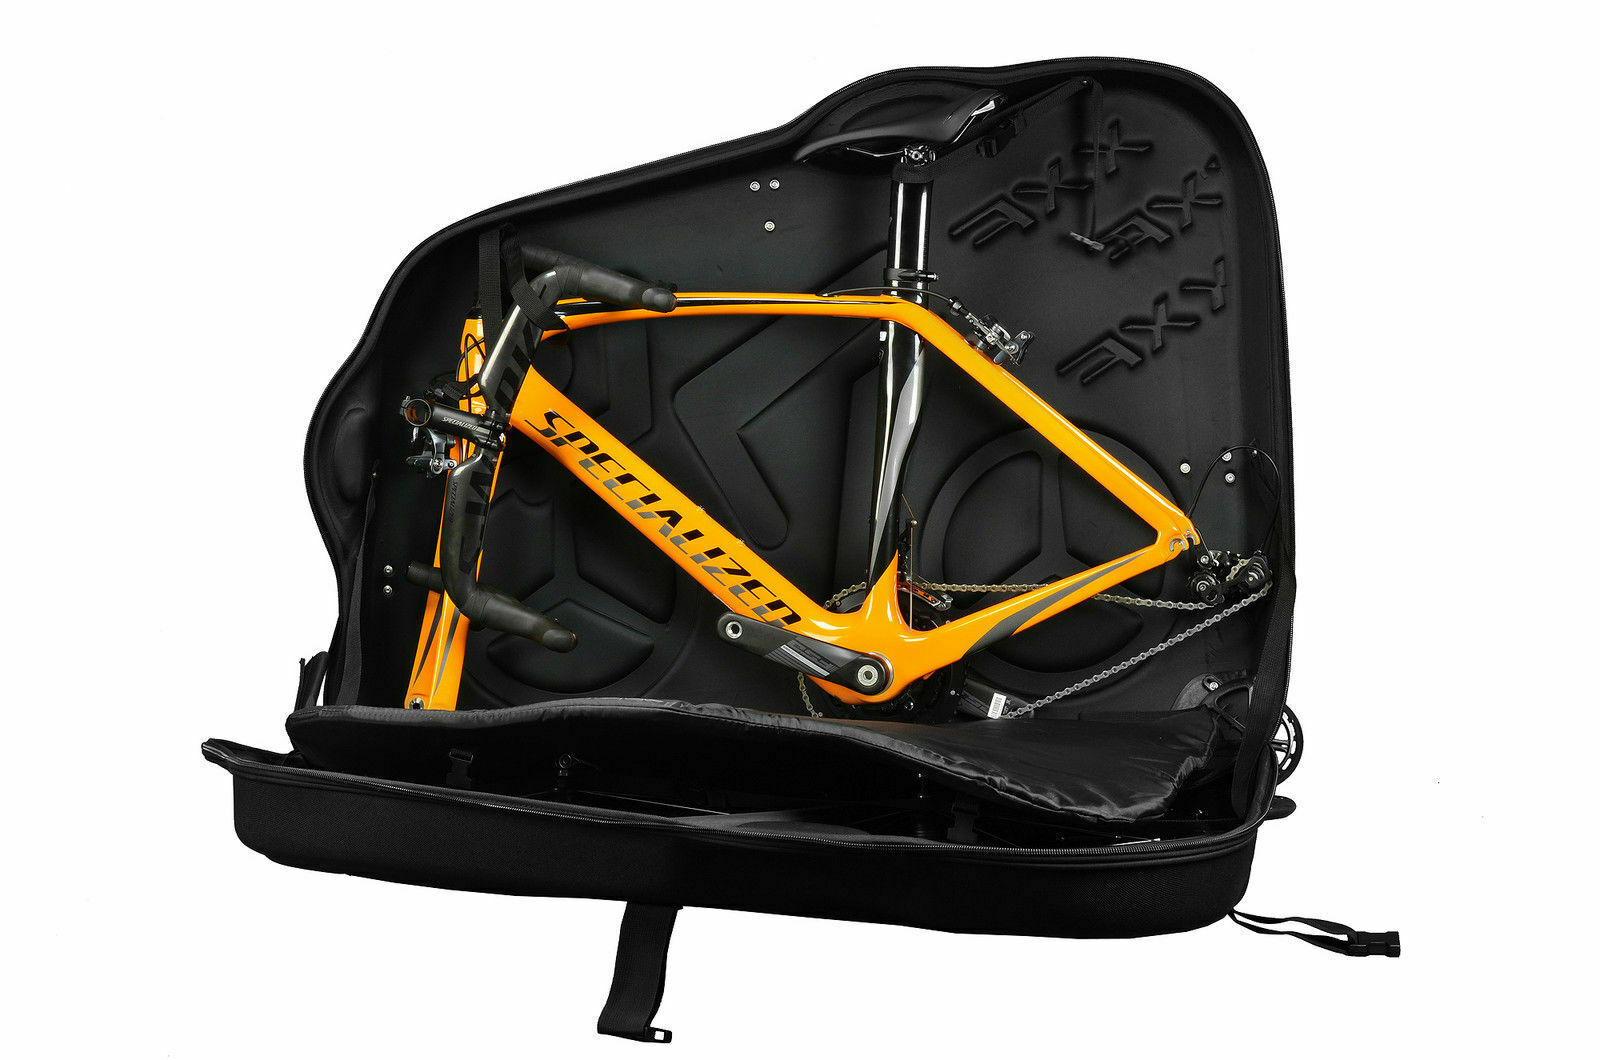 xxf bike bag